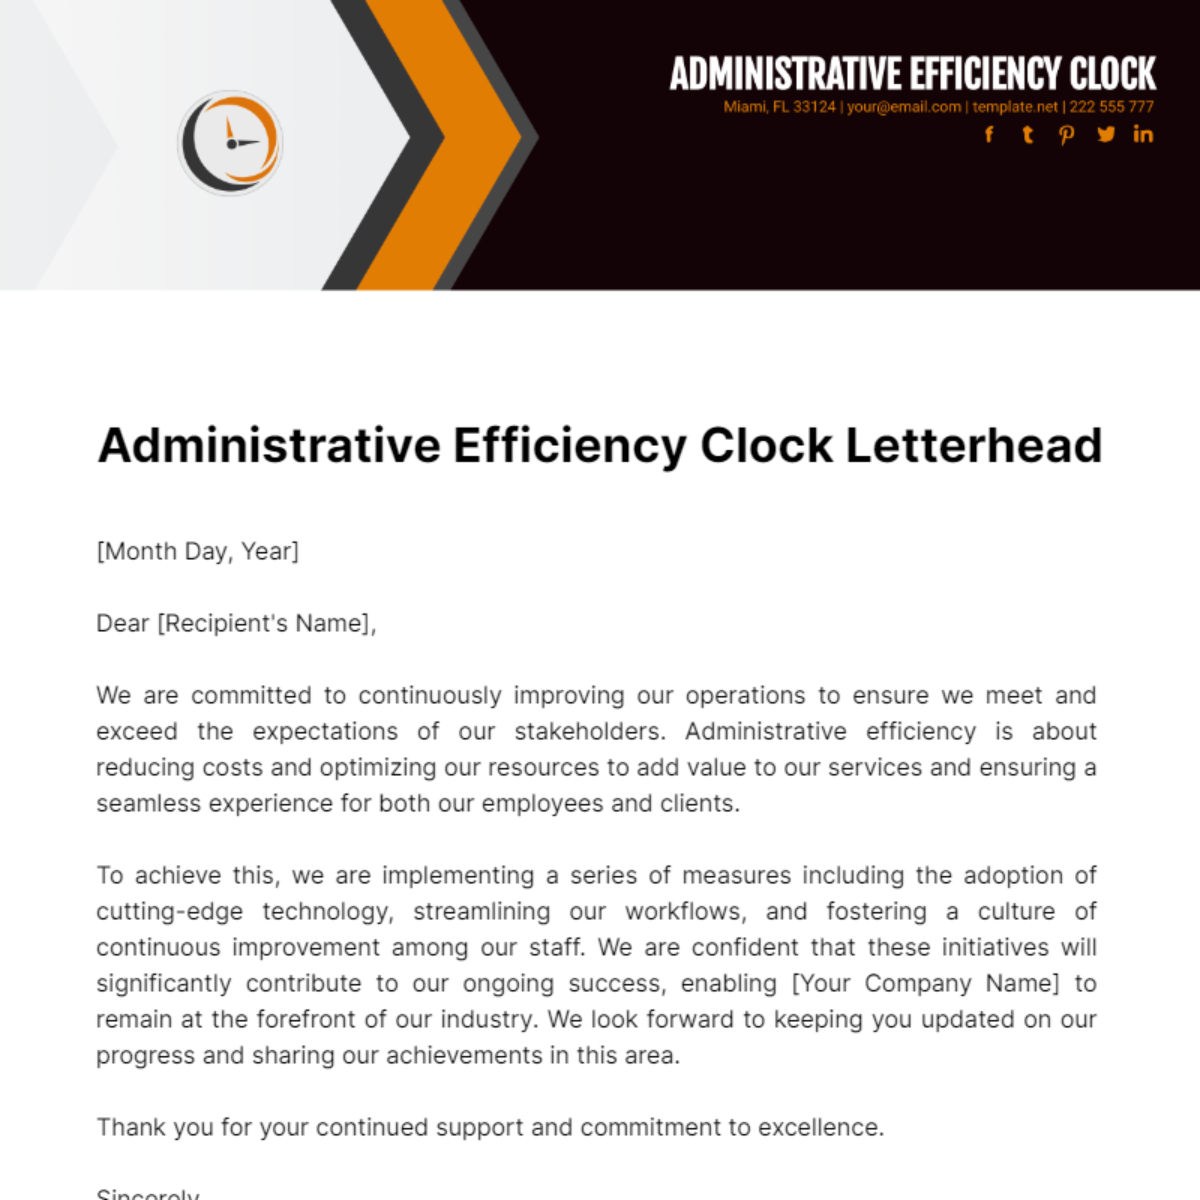 Free Administrative Efficiency Clock Letterhead Template